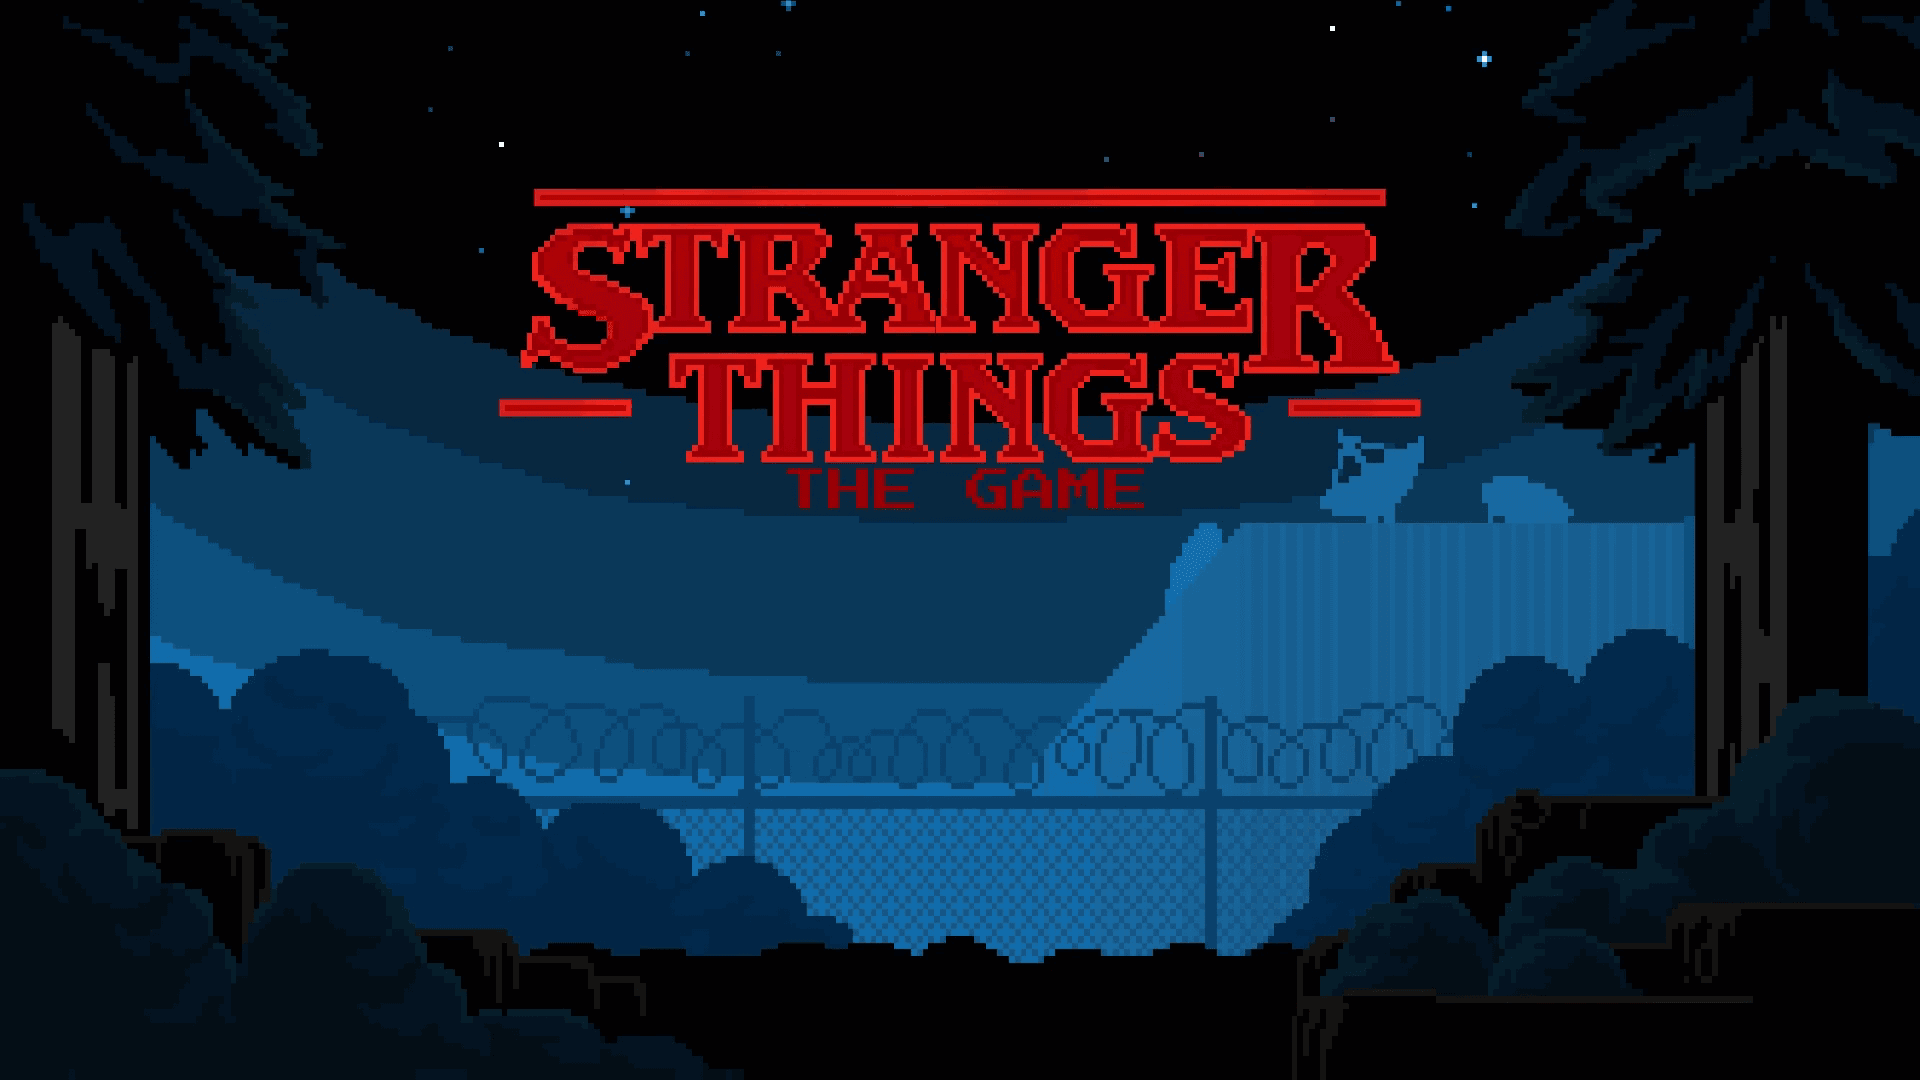 Stranger Things 3 The Game Nintendo Switch Version Free Game Full